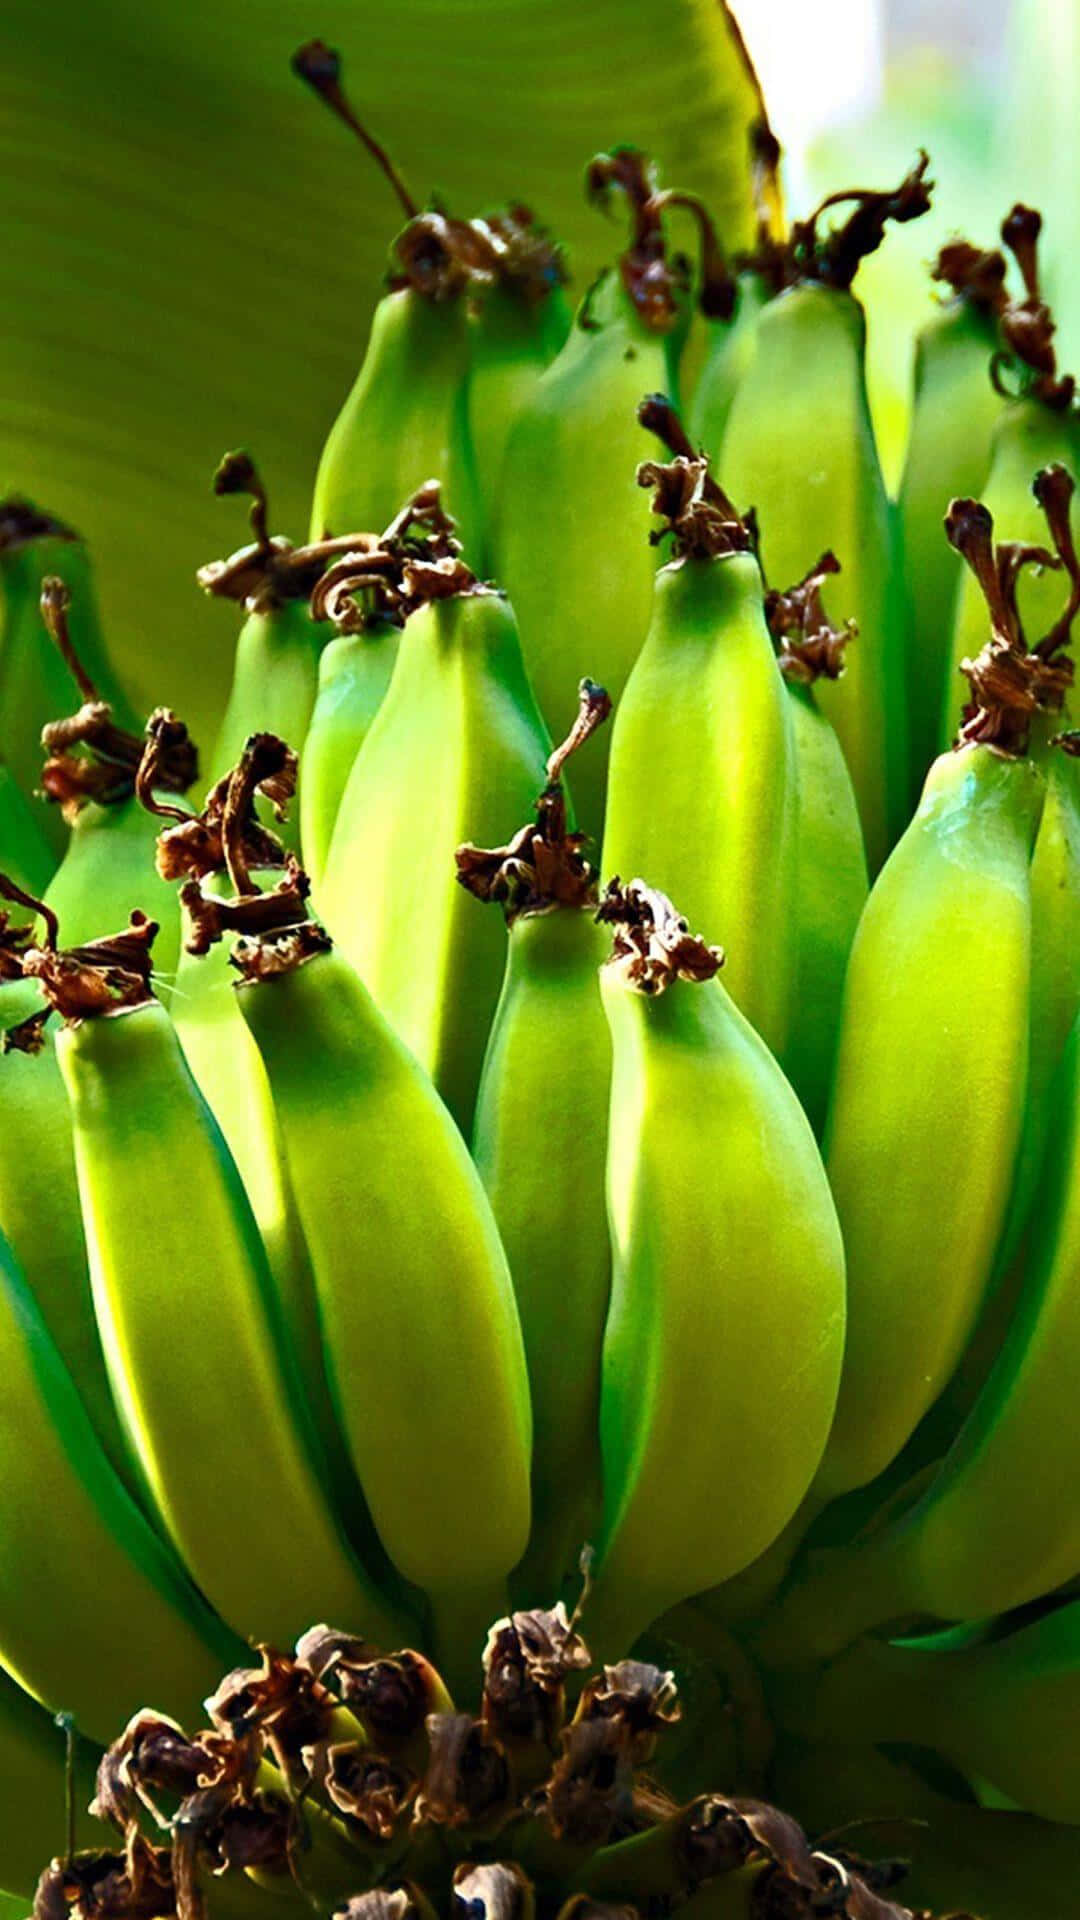 Bananabilder